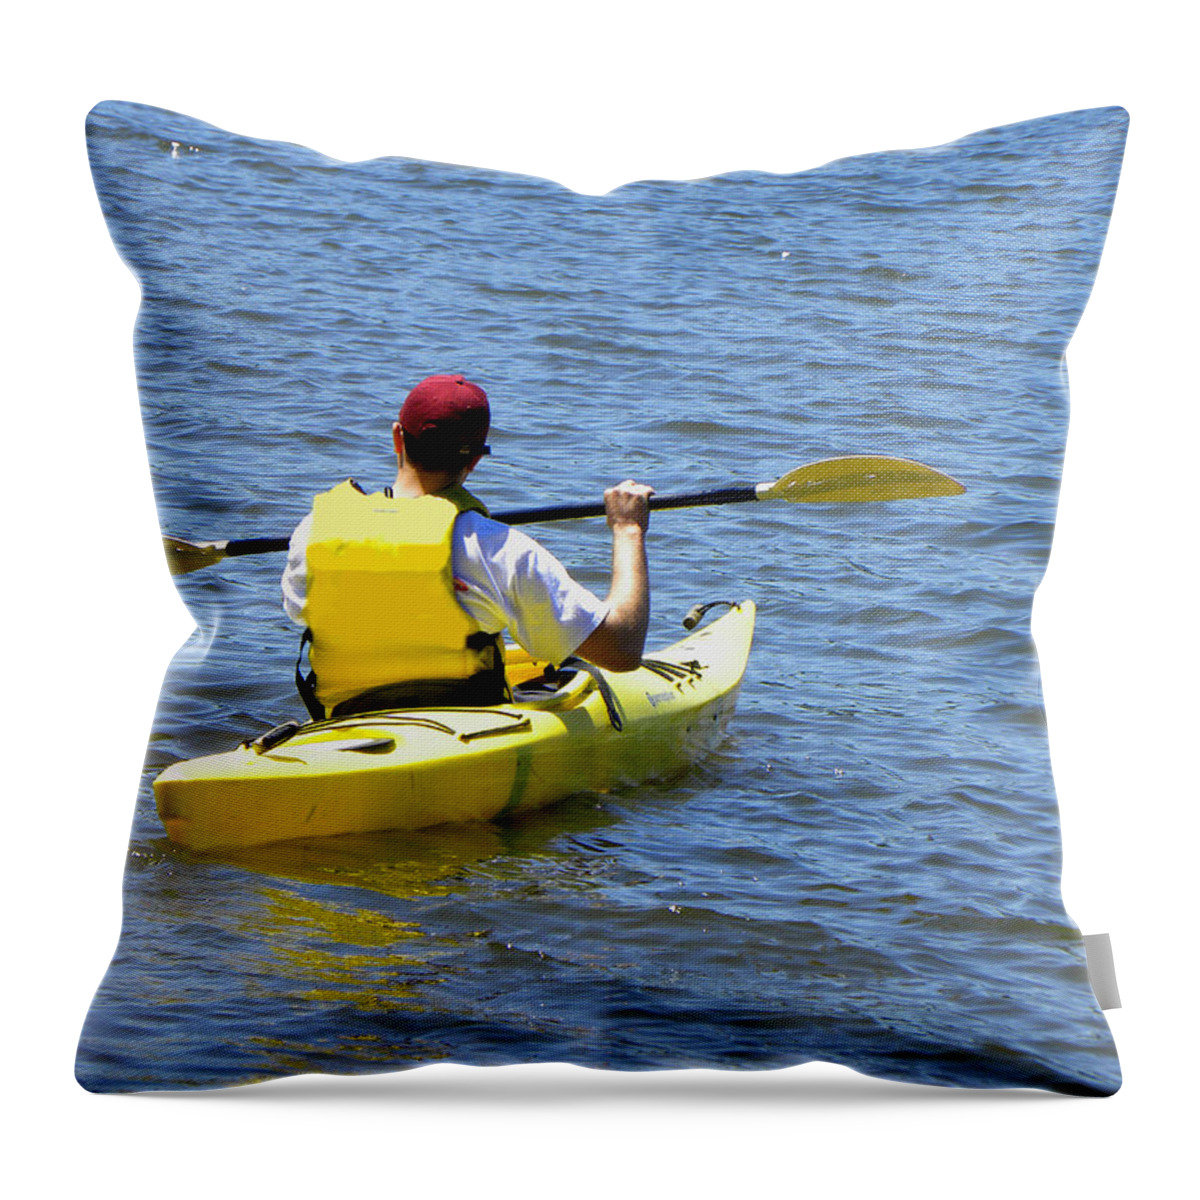 Kayak Throw Pillow featuring the photograph Exploring In A Kayak by Sandi OReilly